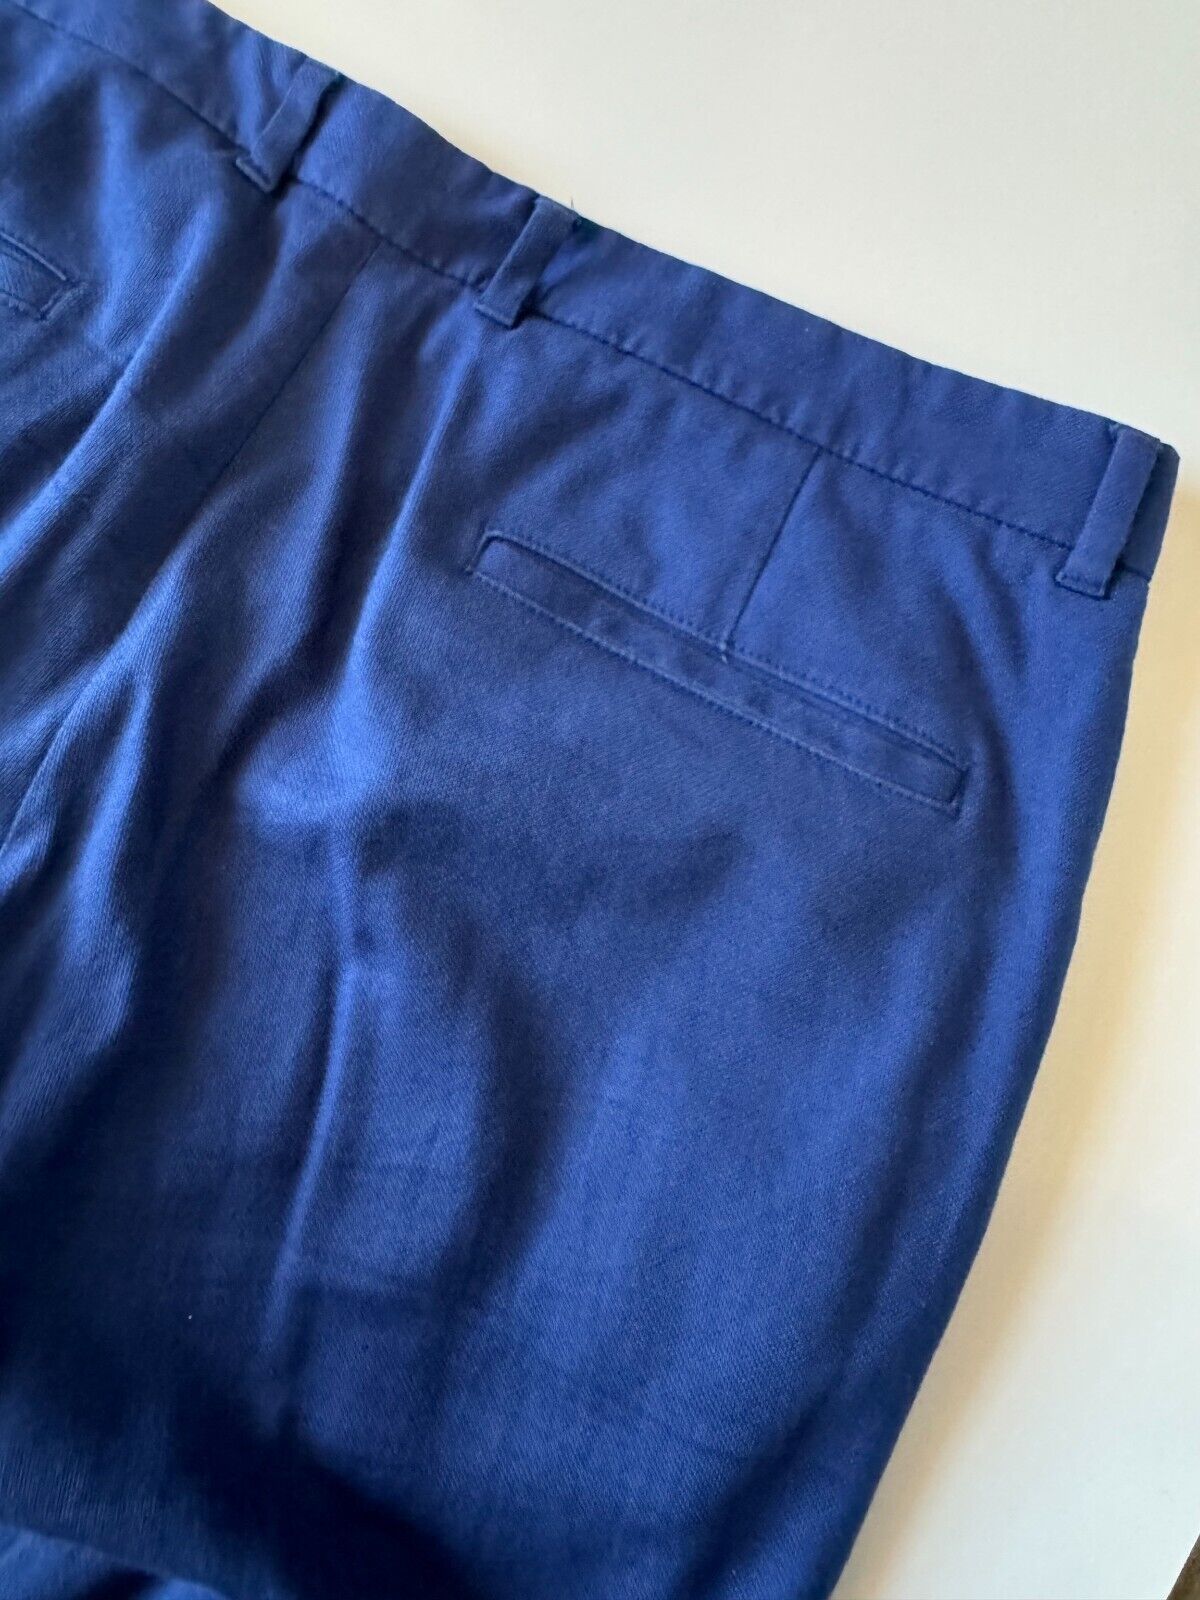 Boss Hugo Boss Men’s Blue Dress Pants Size 34 US